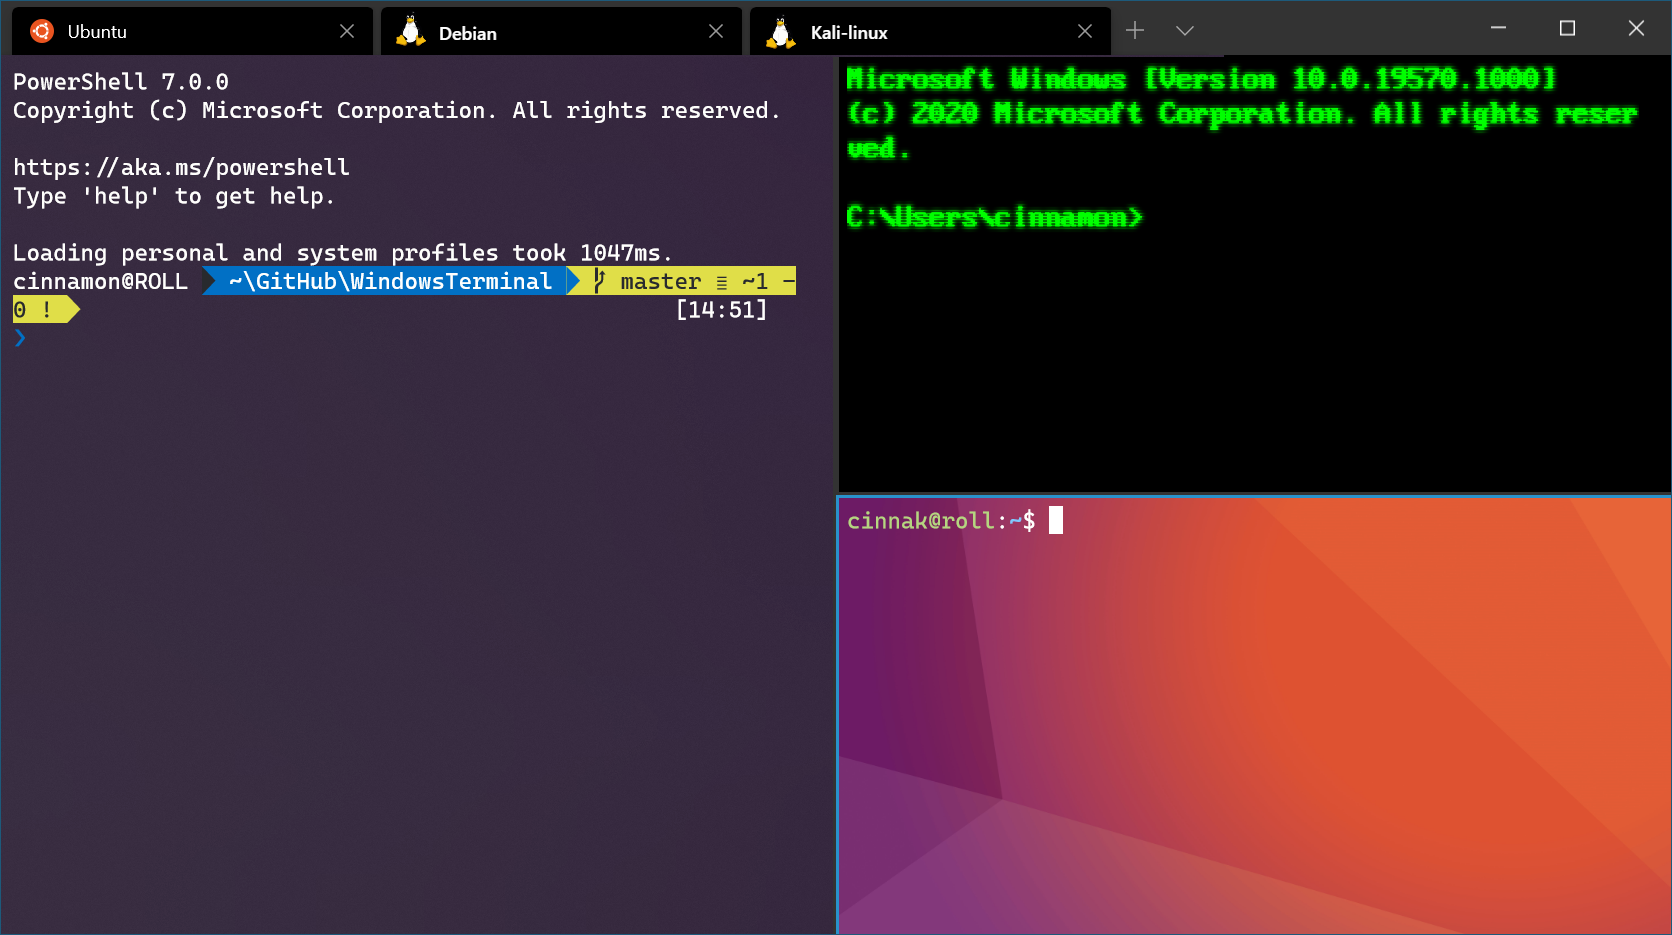 installing p4merge on linux